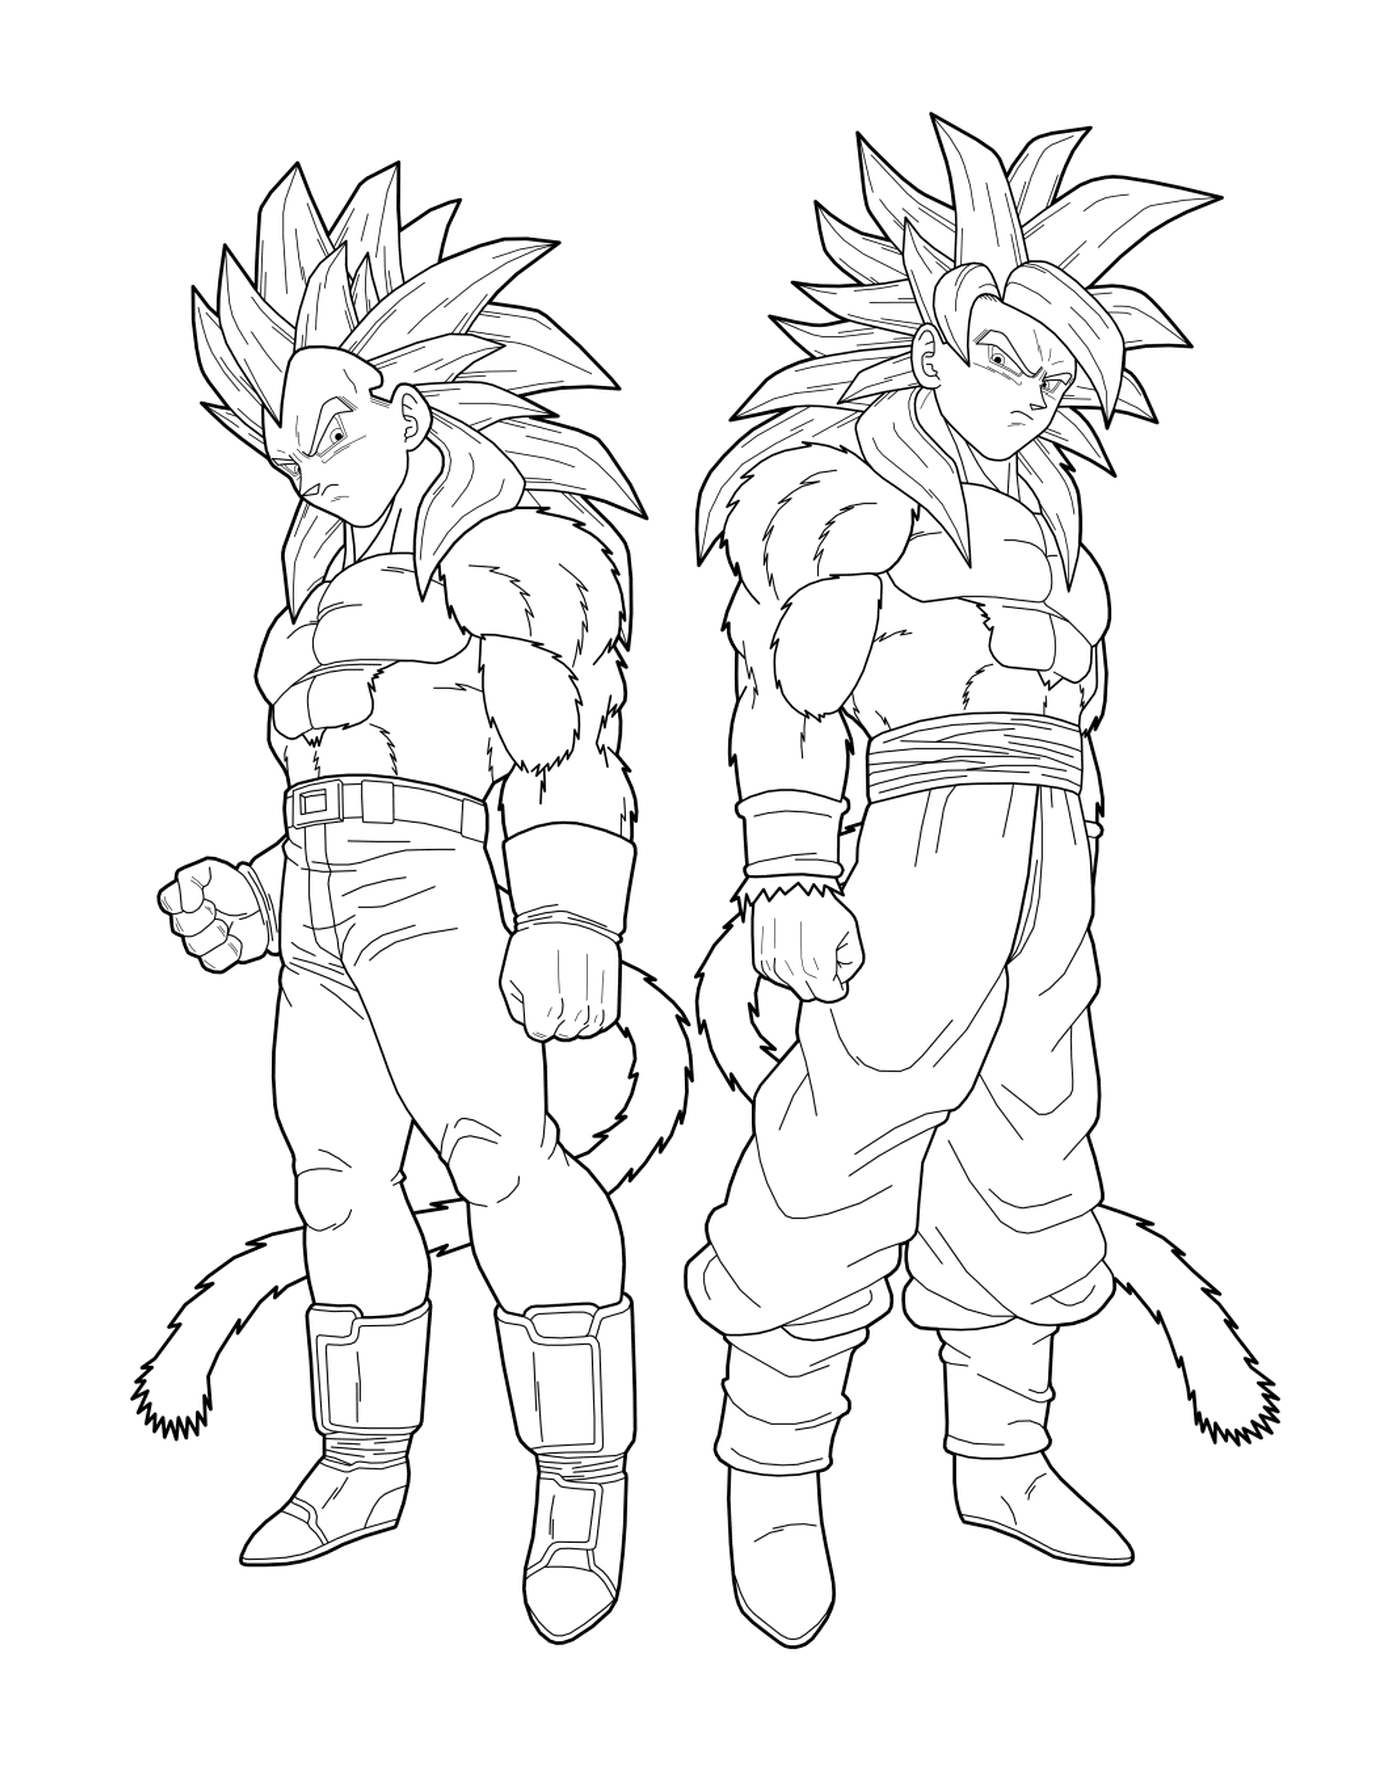  Goku and Vegeta of Dragon Ball Z stand side by side 